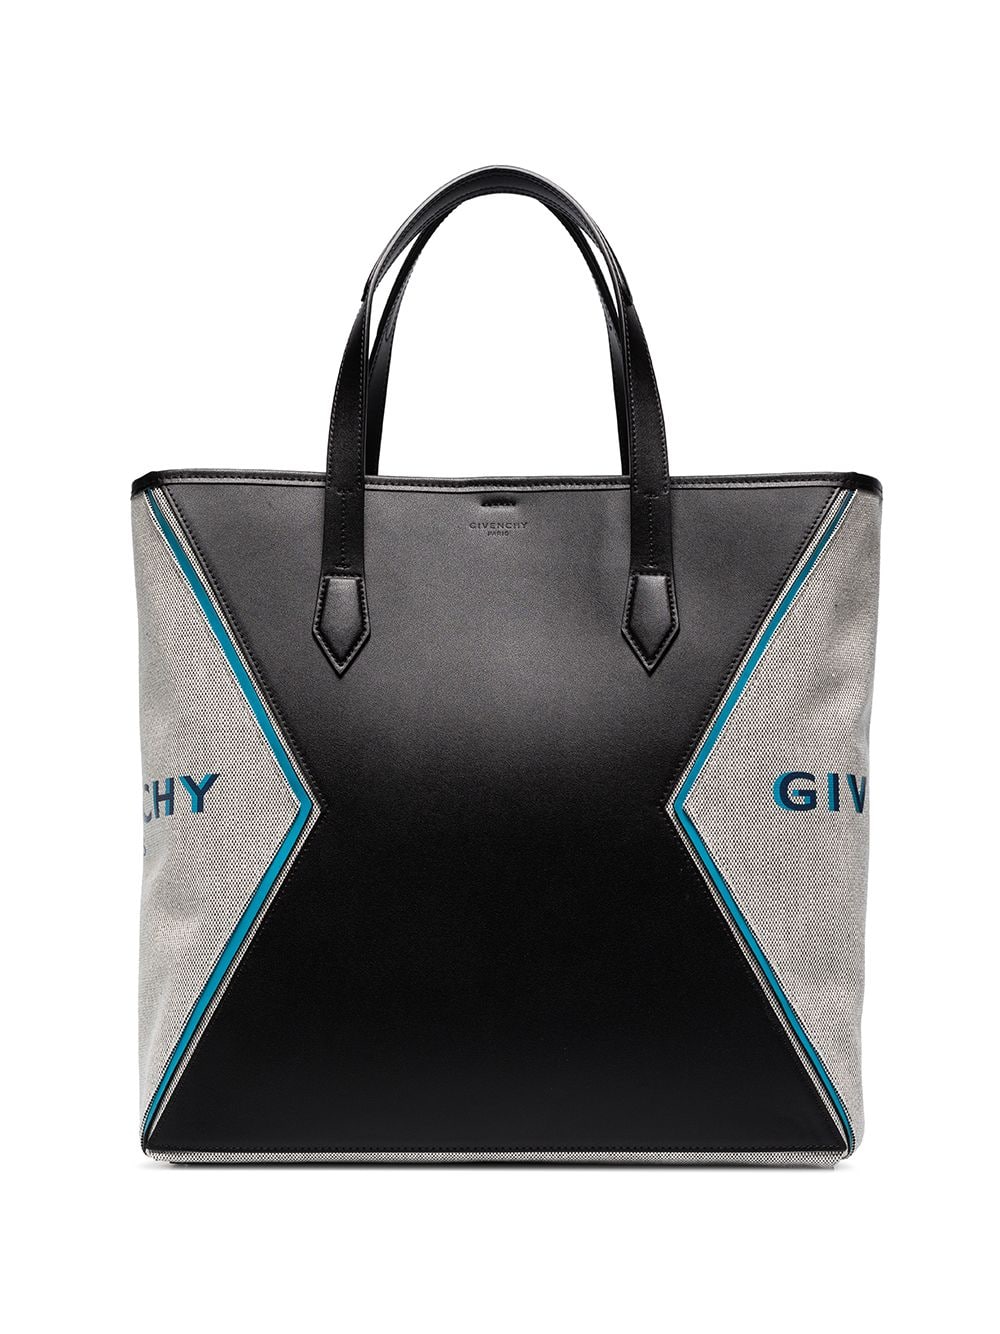 фото Givenchy сумка-тоут paris bond с логотипом